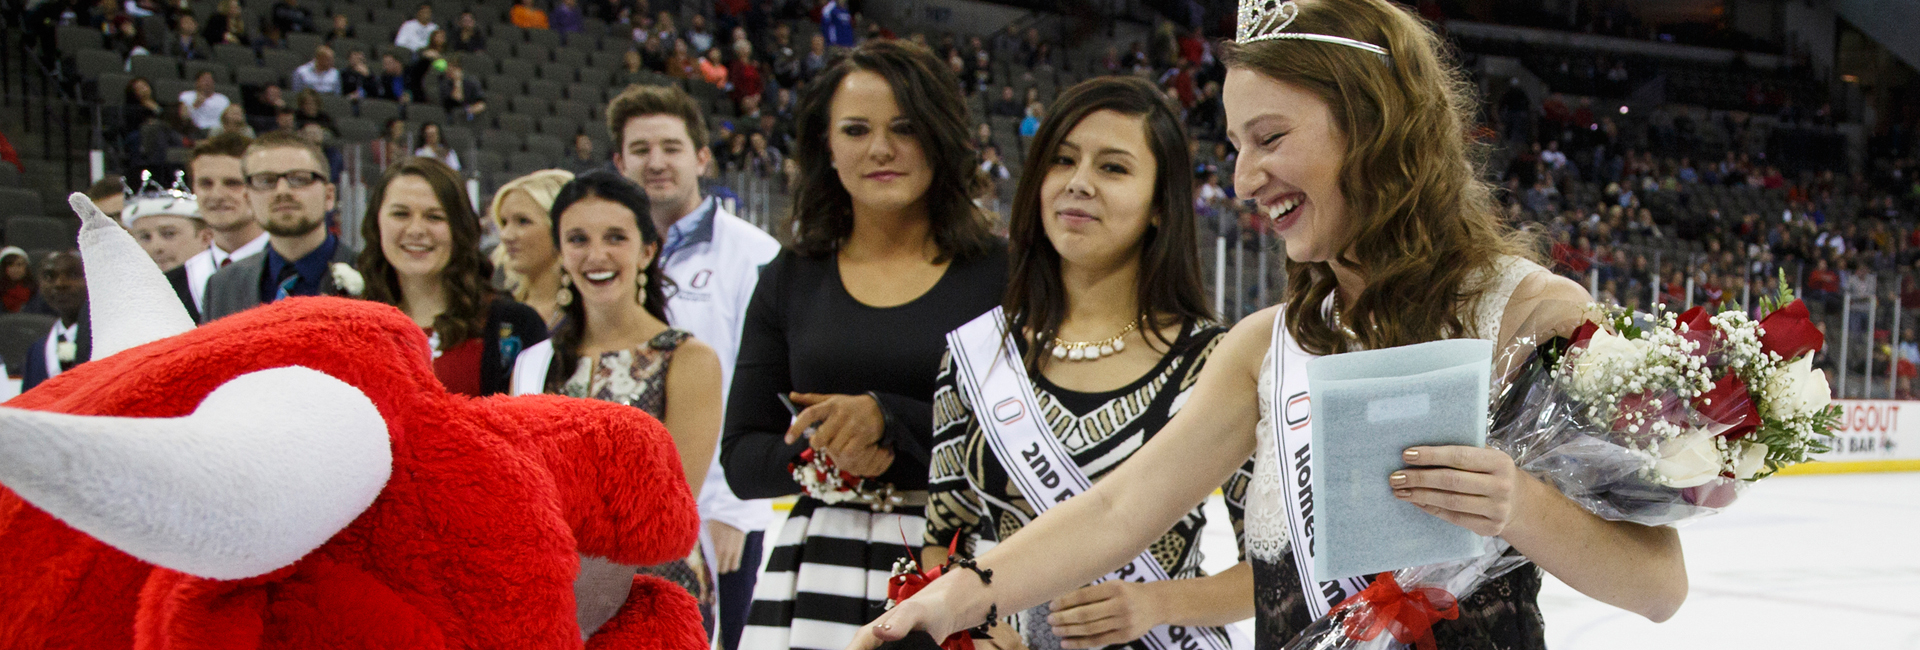 Down on one knee, Durango congratulates 2014 Homecoming Queen Morgan Birkel